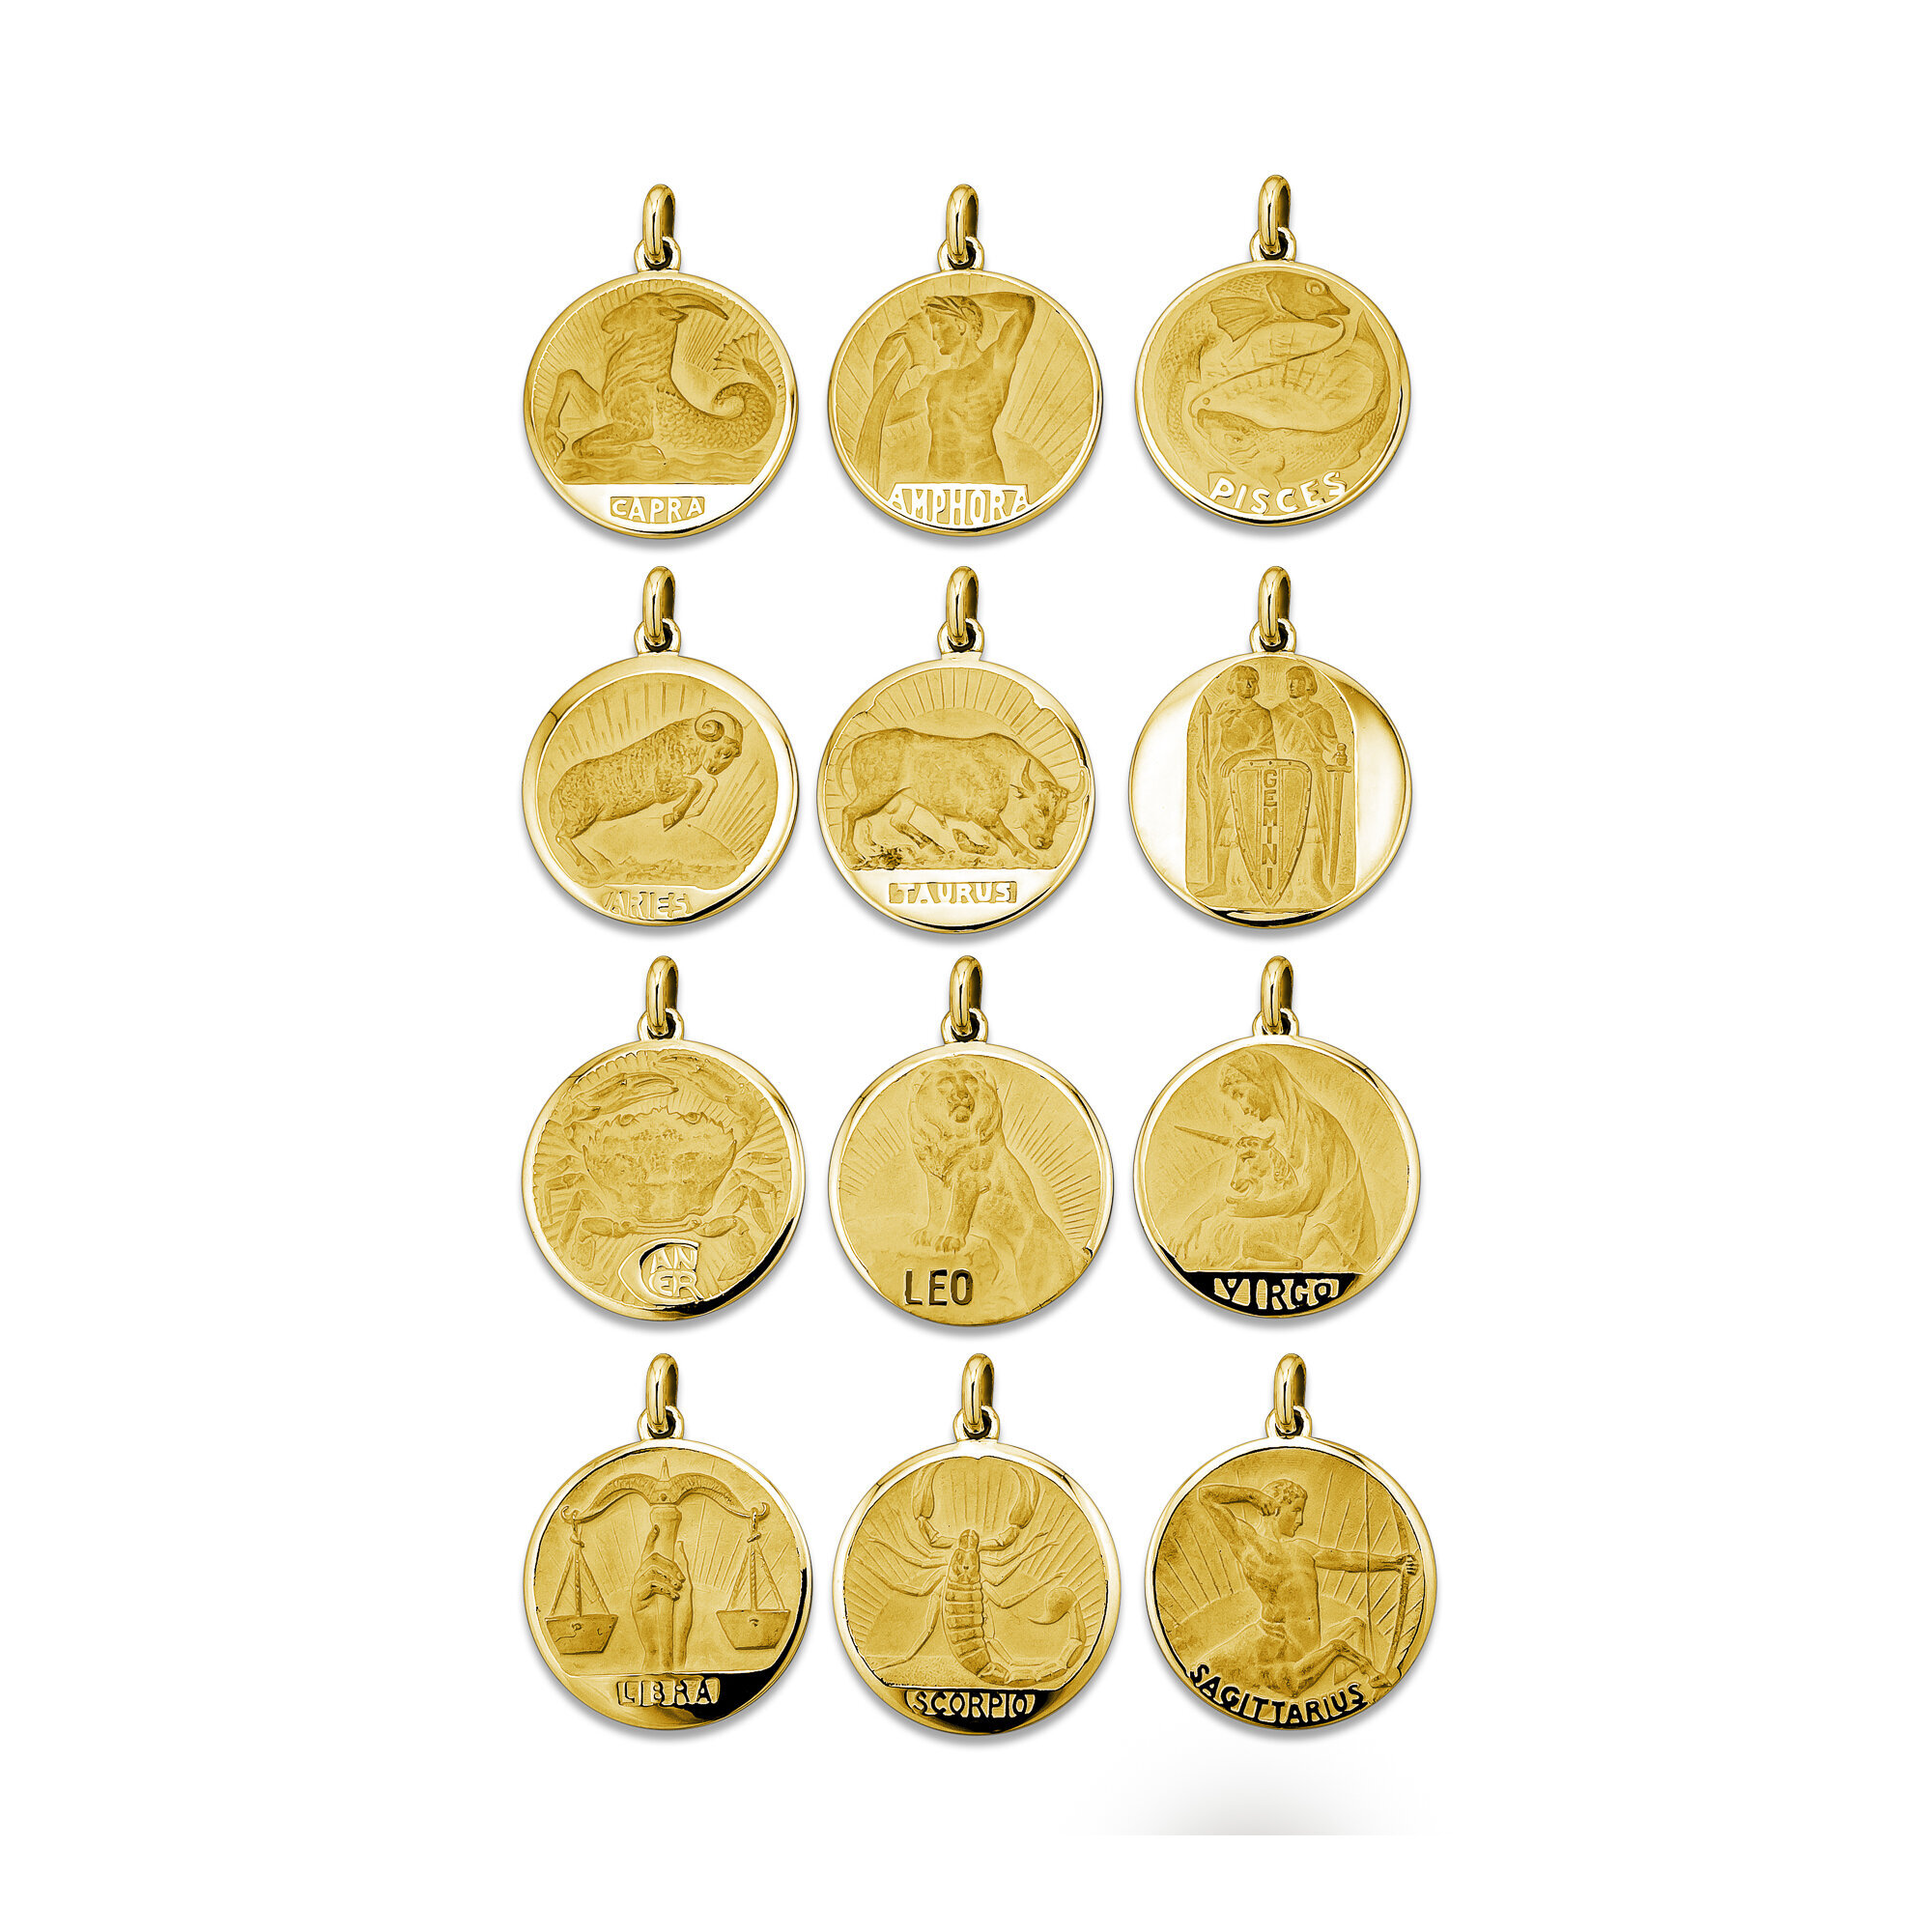 Zodiac 18ct Yellow Gold Gemini Necklace